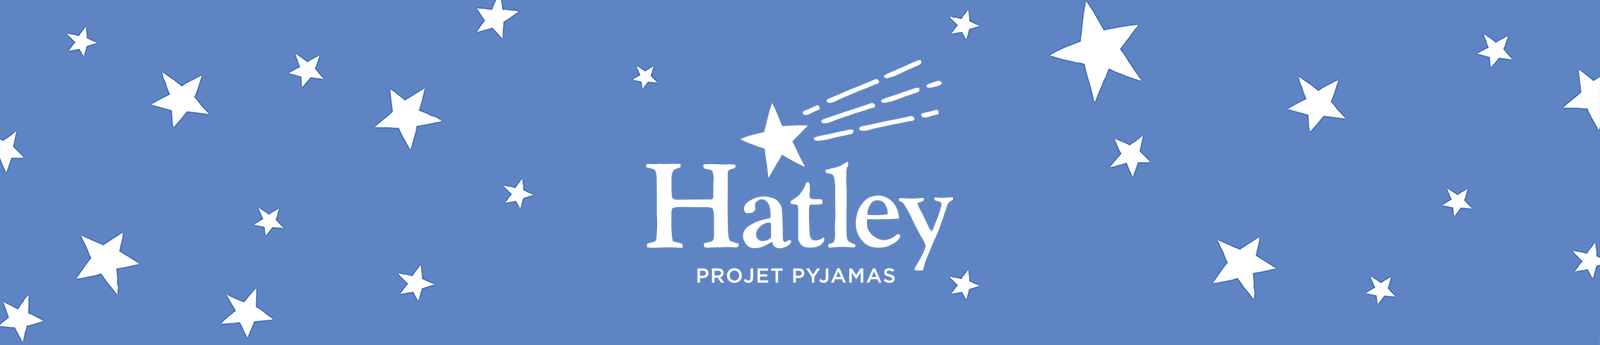 Hatley Pajama Project